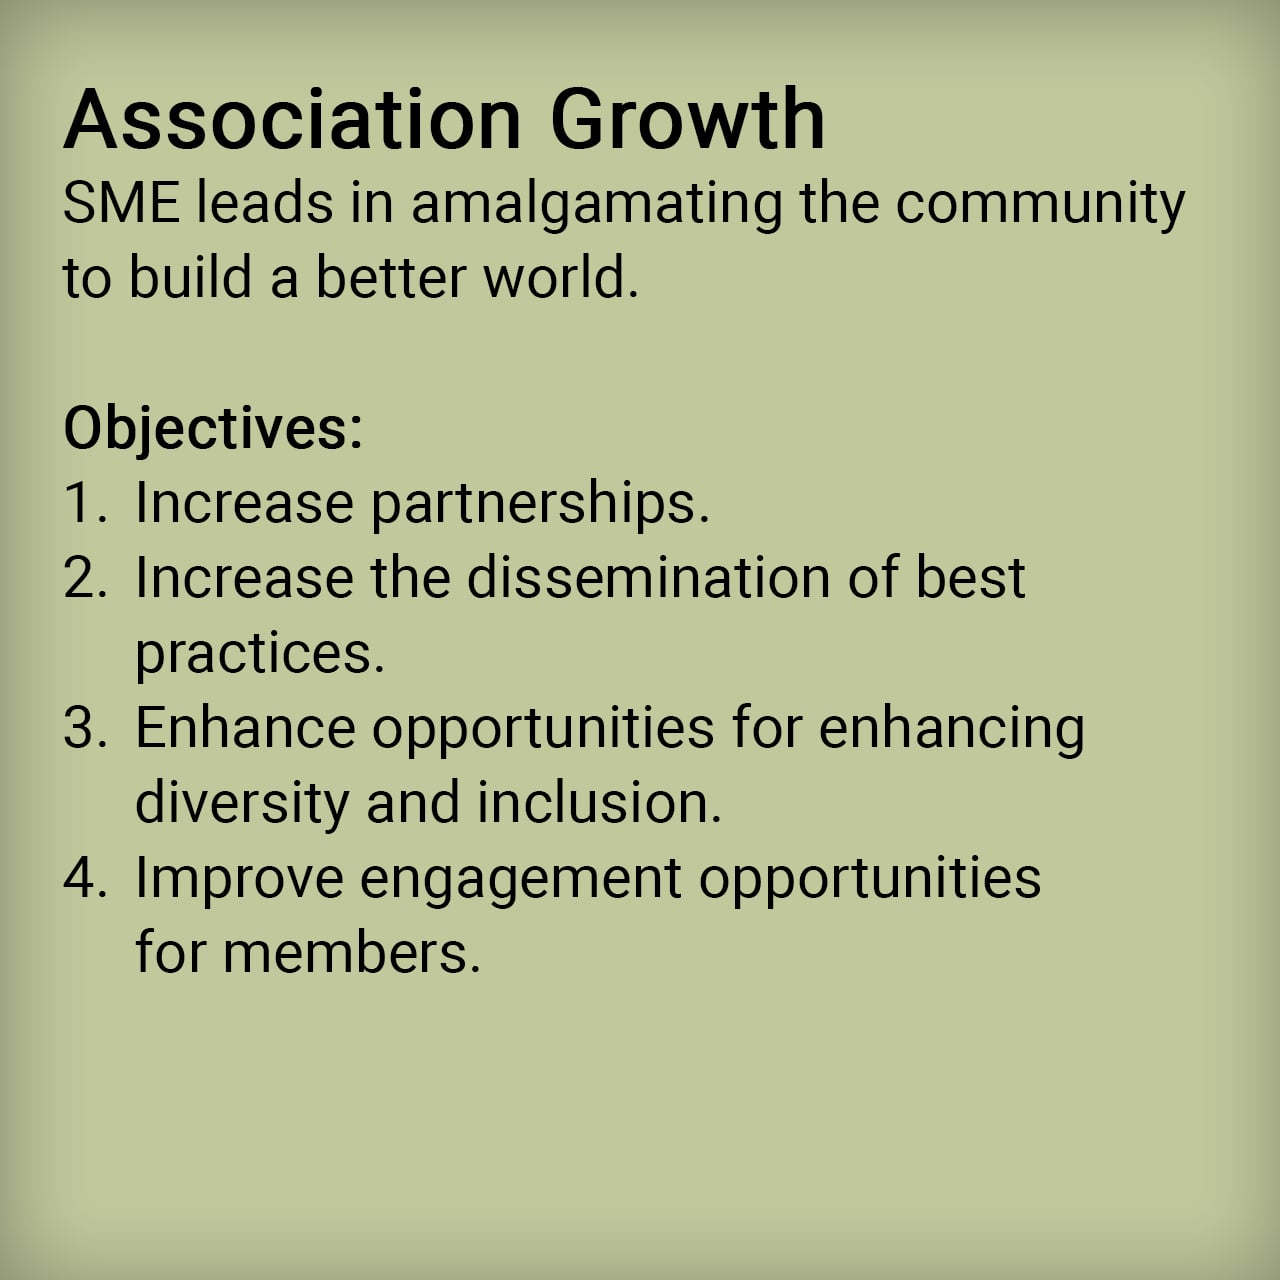 Association Growth